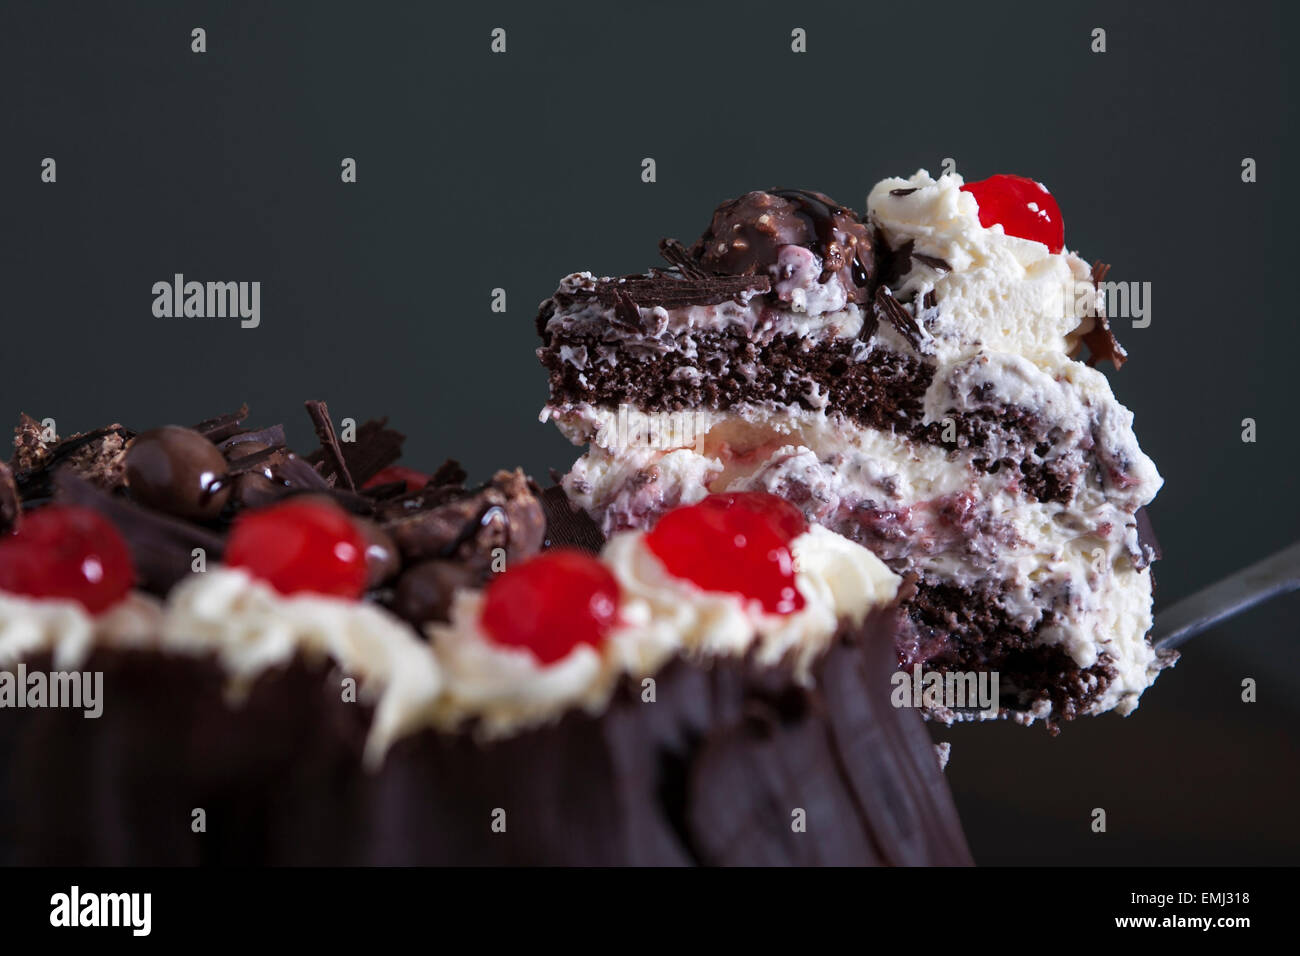 Chocolate cake with cream and cherries on top Stock Photo